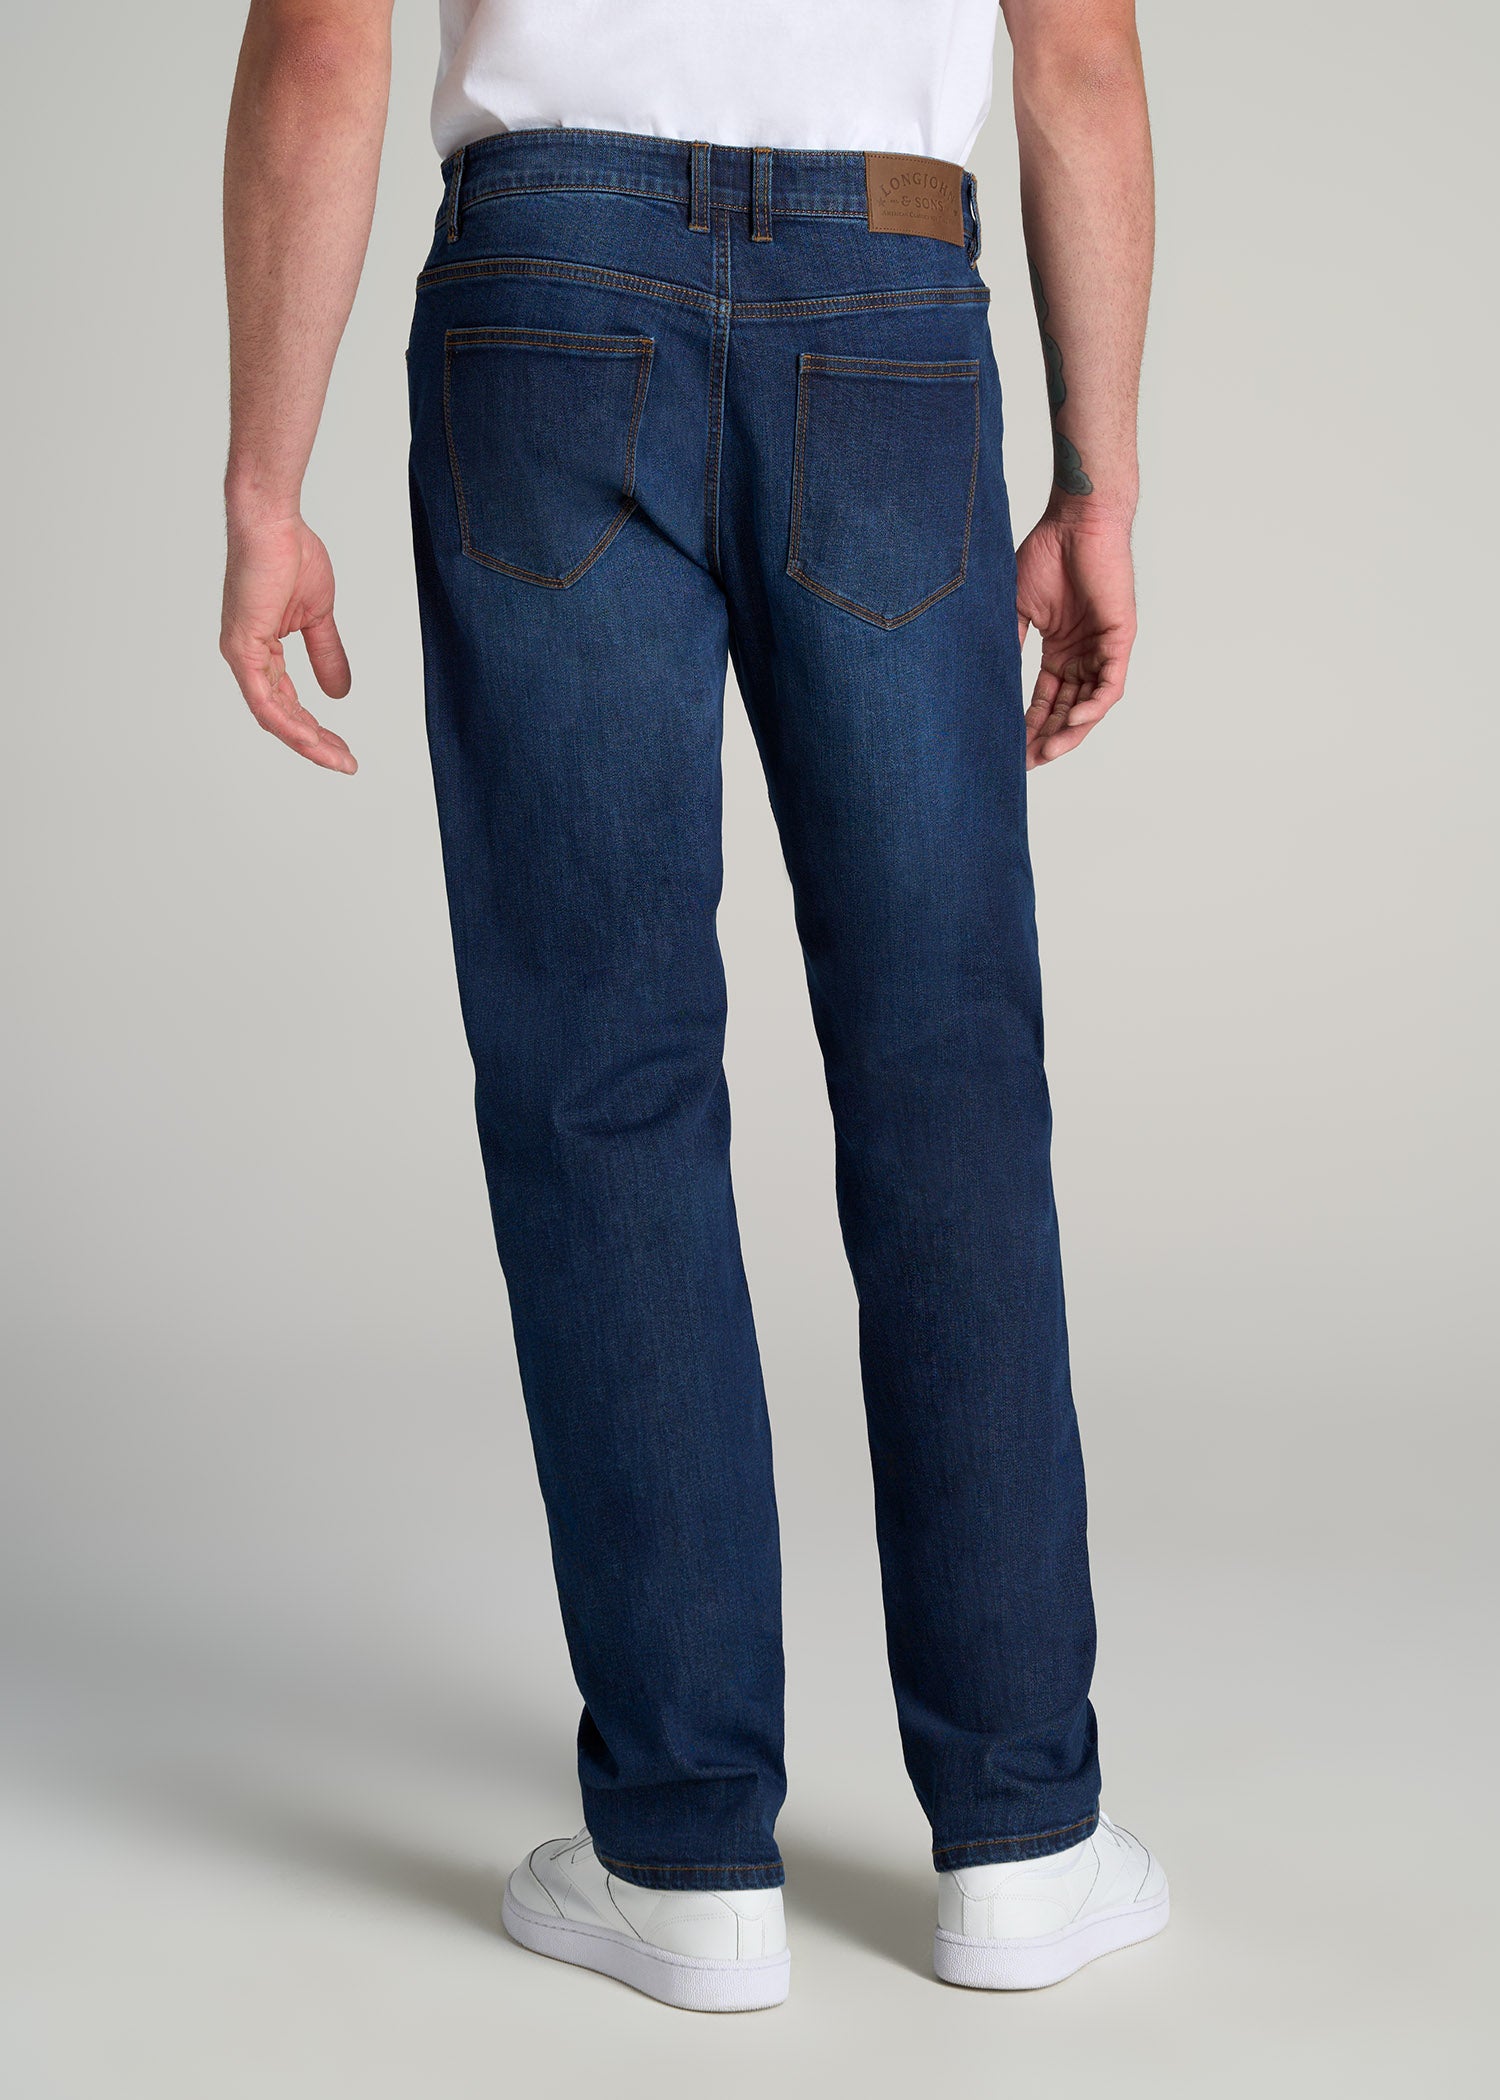 Men's Loose Straight Breeches Sports Half Pants Short Jeans Casual Denim  Shorts